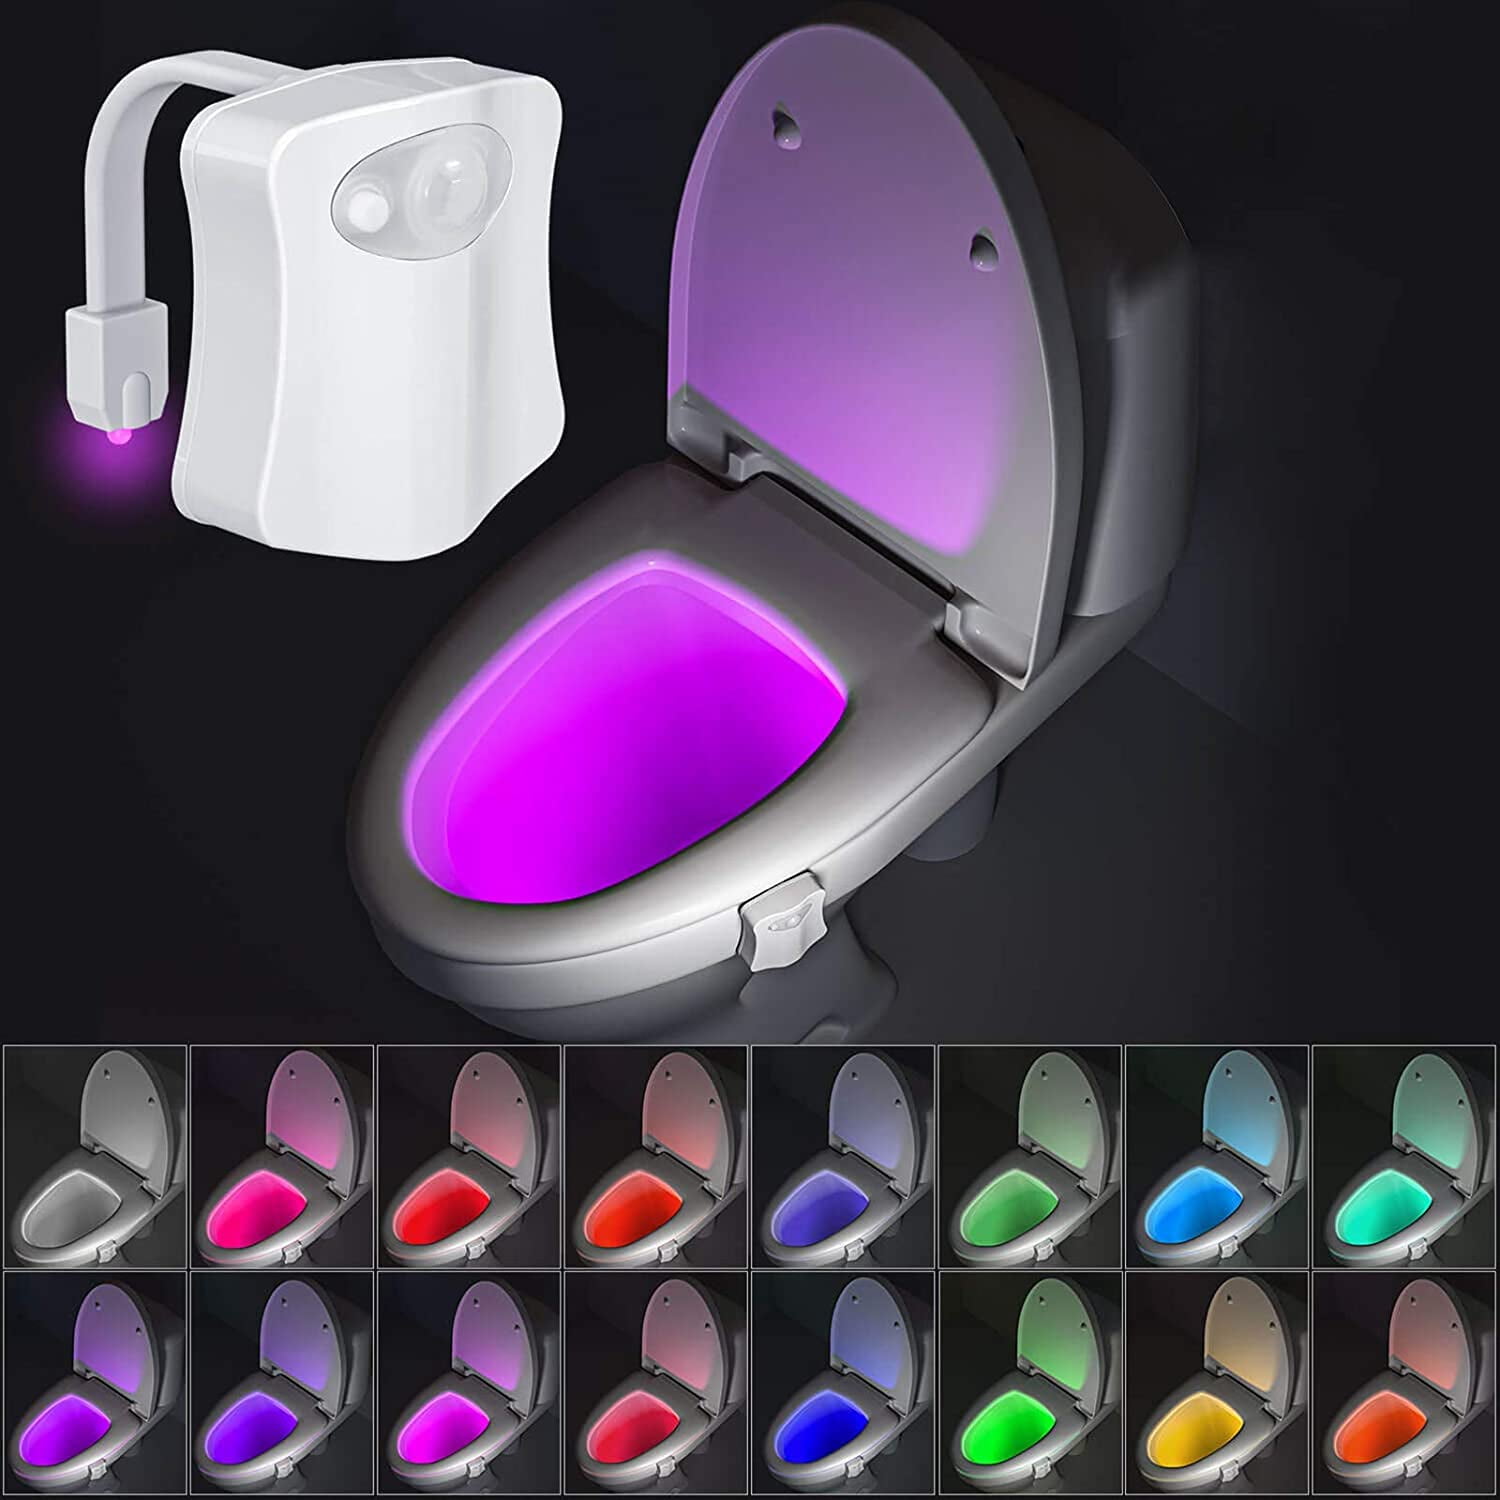 16 Colors Night Light Toilet Night Light Automatic Motion Sensor Light For Bathroom Washroom Glow Bowl Night Light Fit For Any Toilet Multi Colored Small Walmart Com